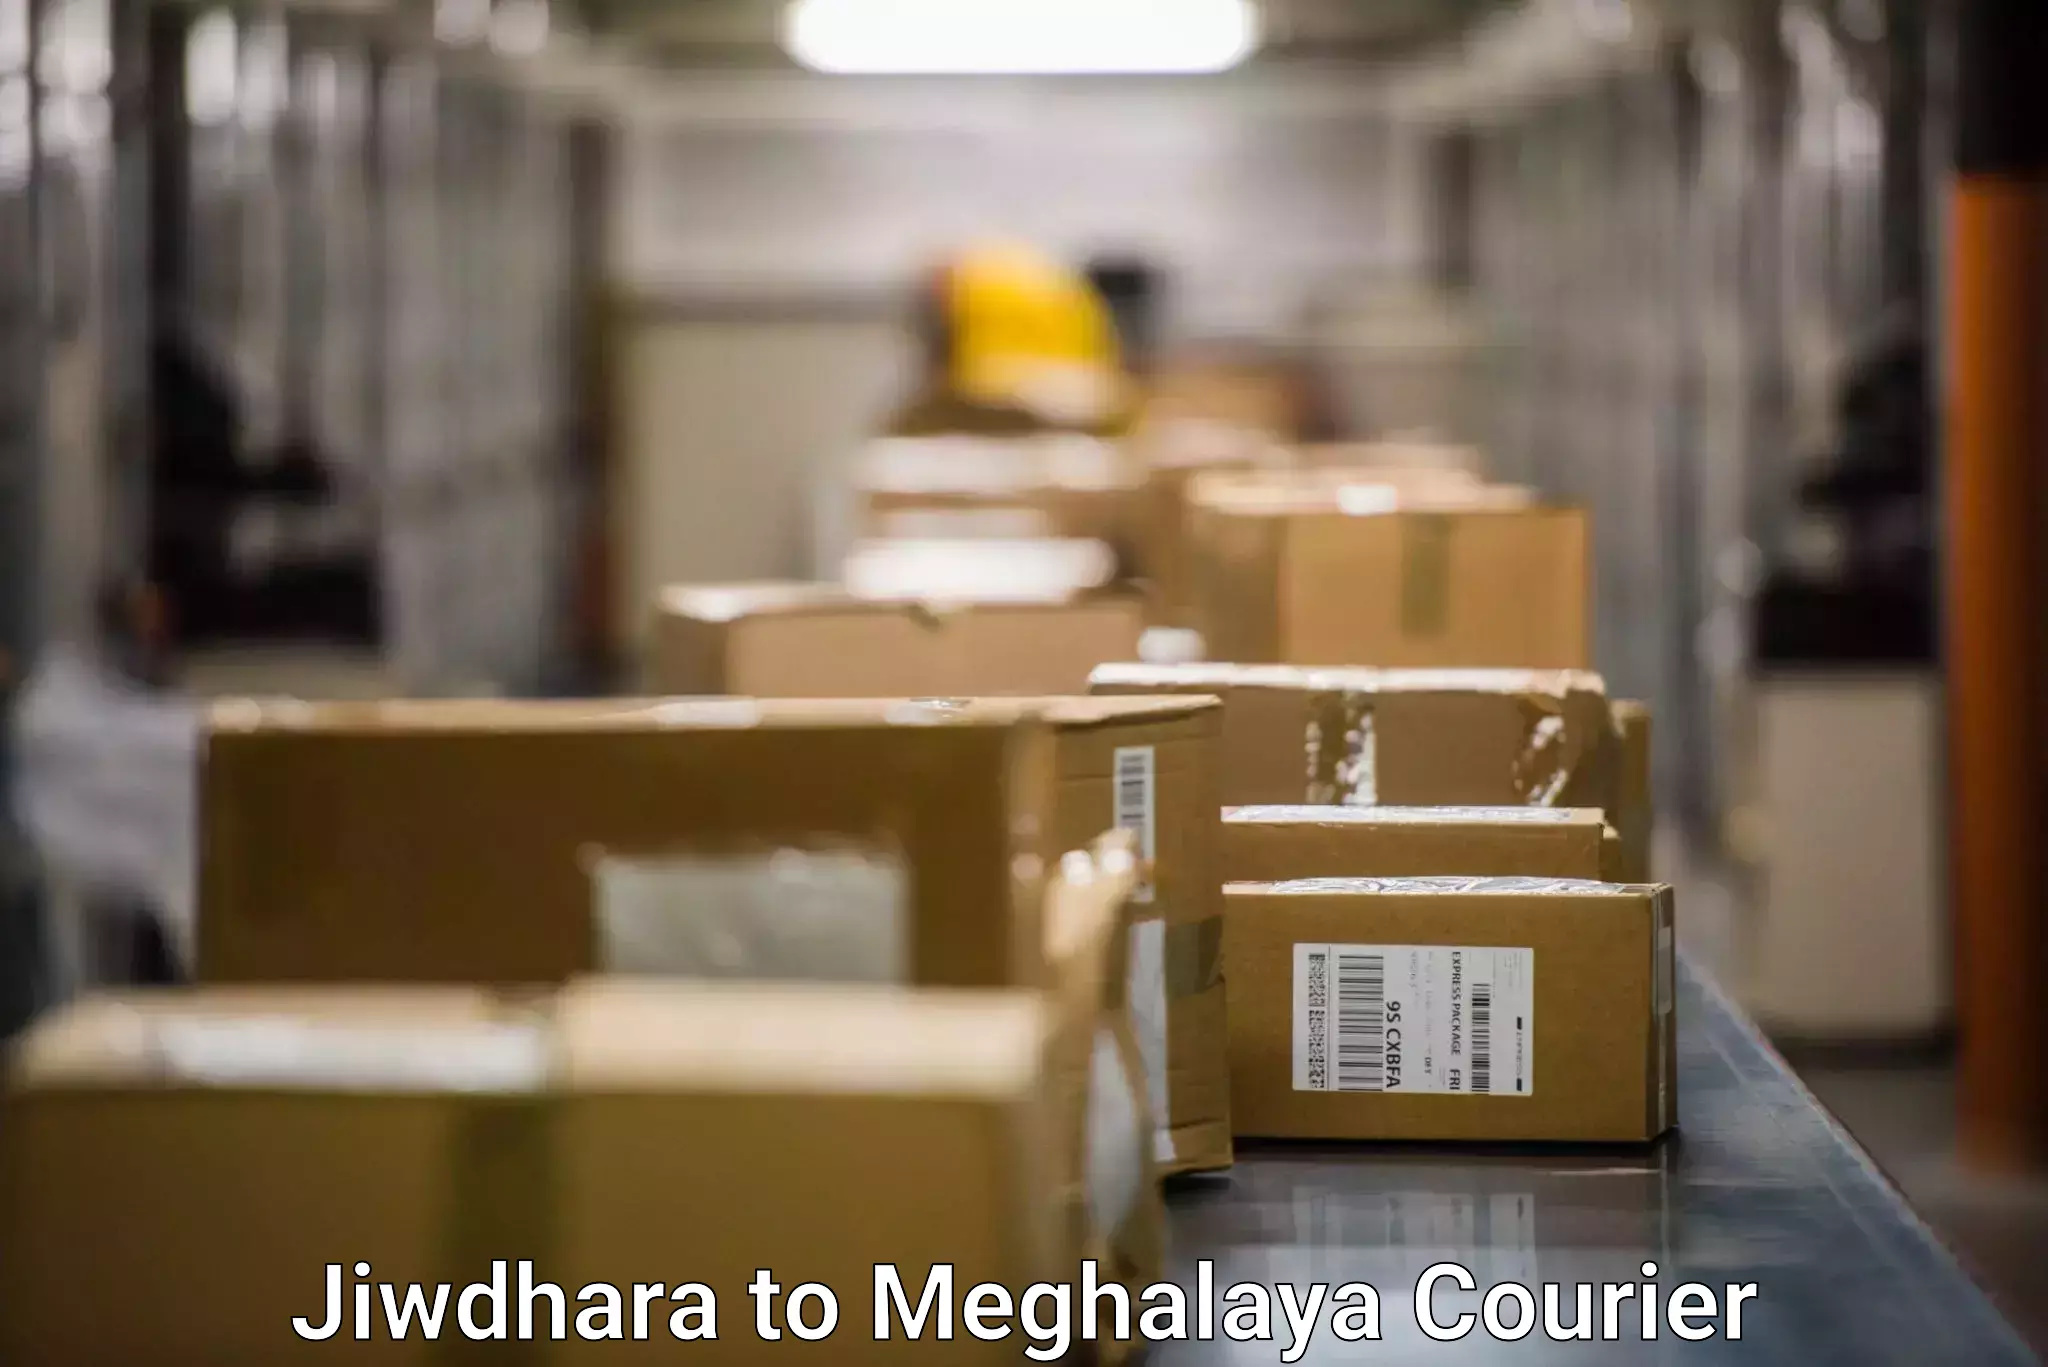 Courier service innovation Jiwdhara to Meghalaya